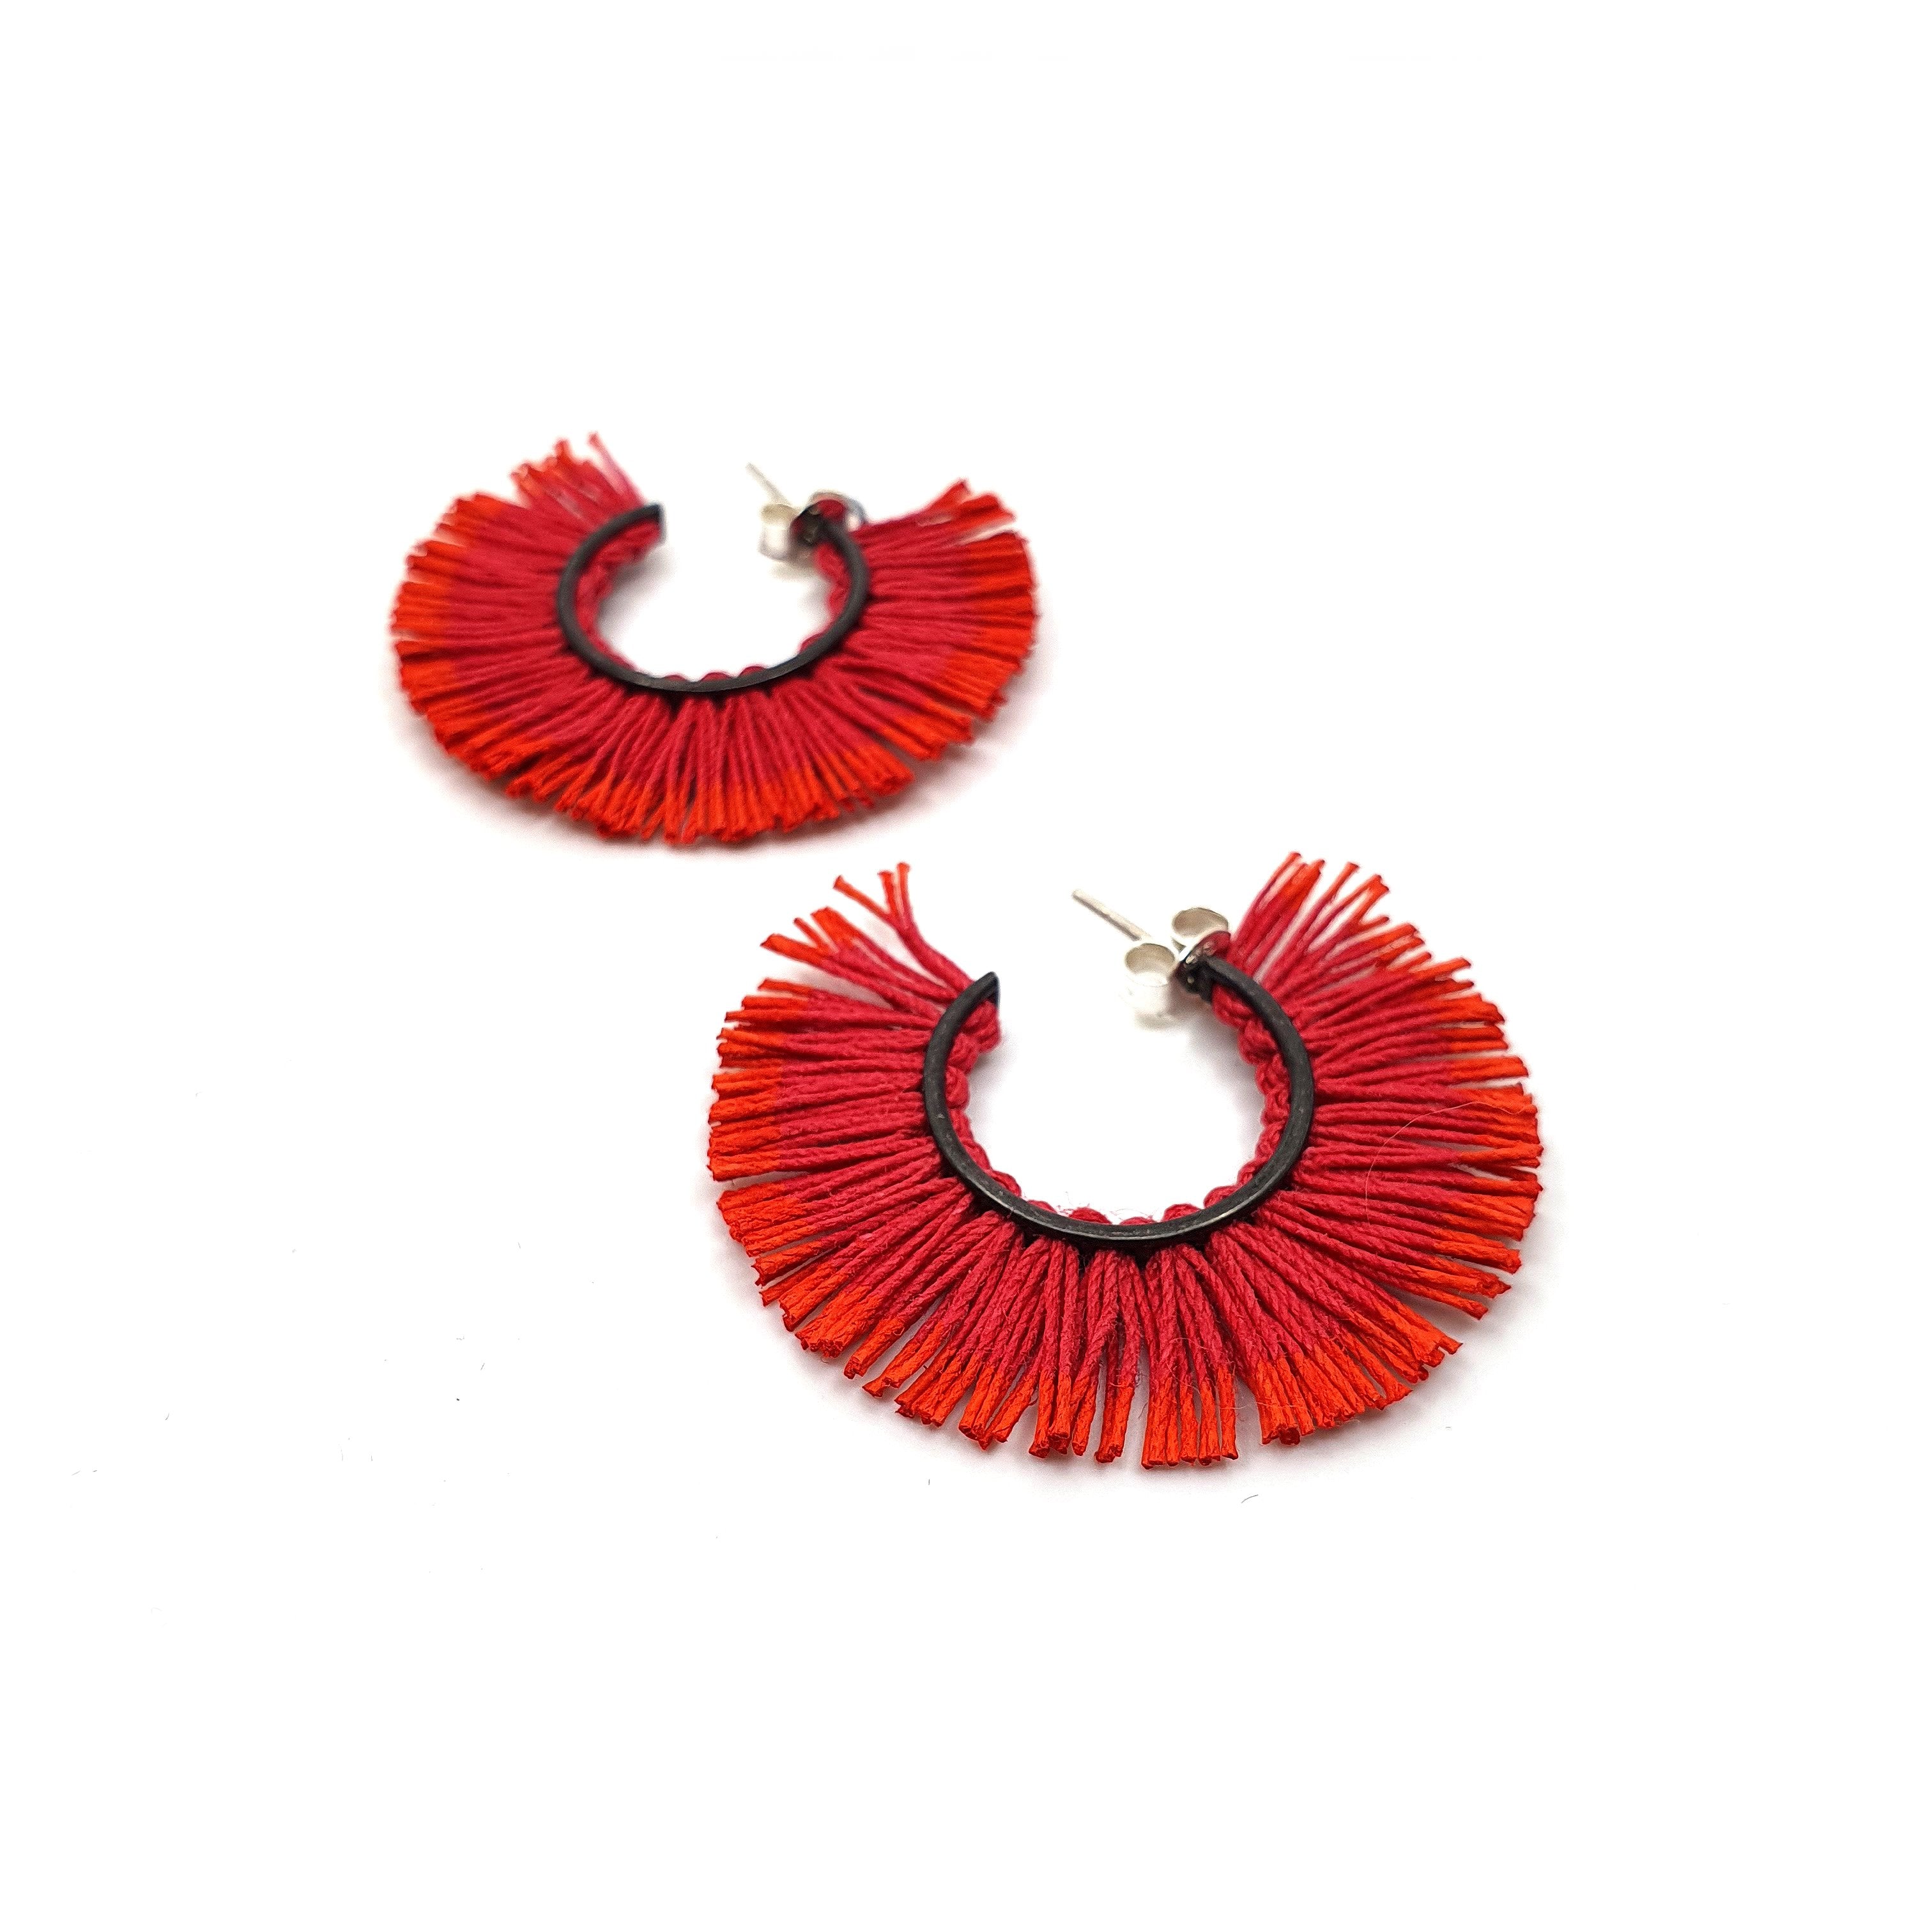 Small Red and Orange Fringed Hoop Earrings